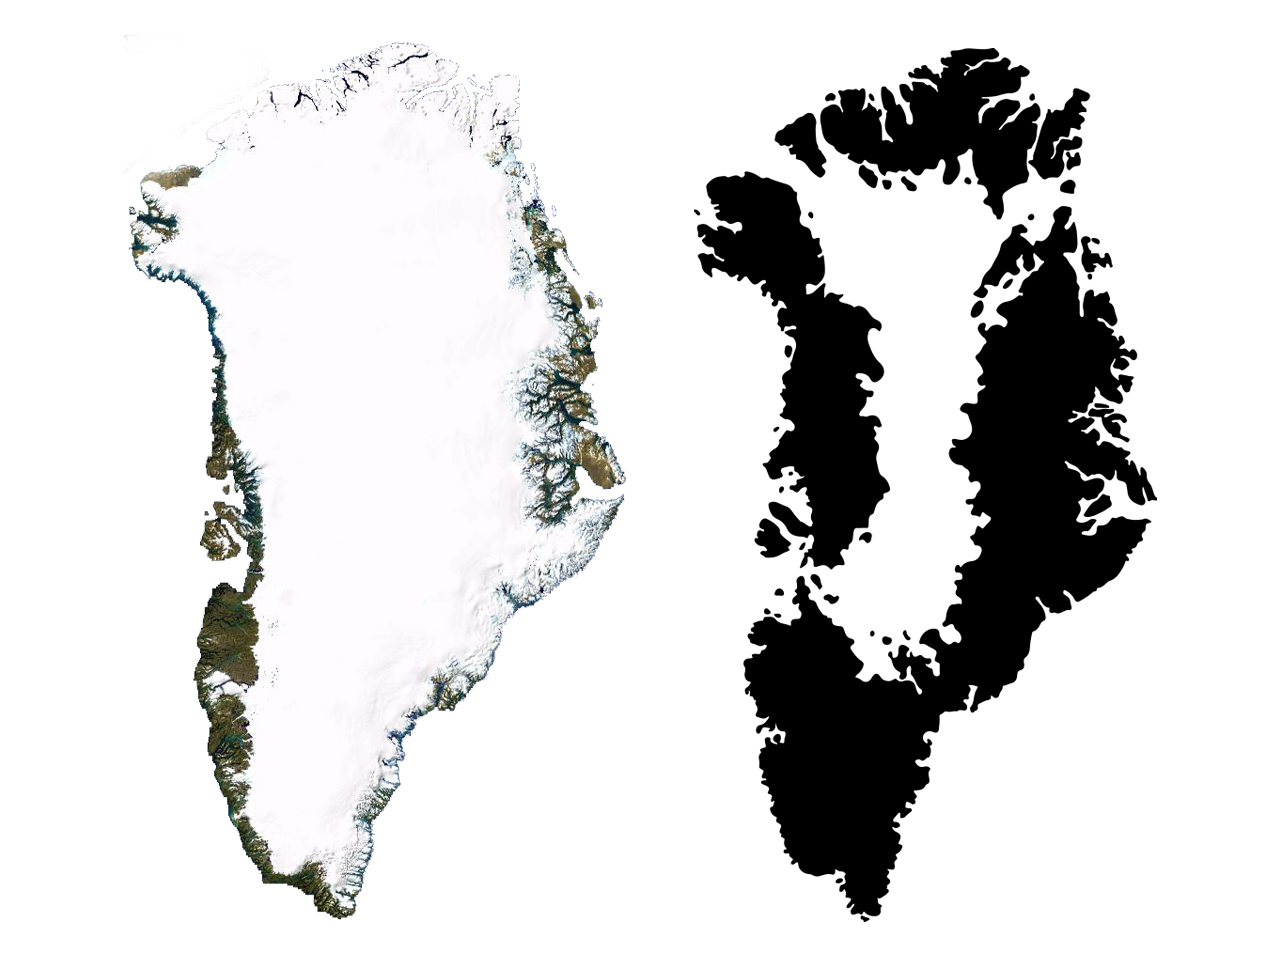 Greenland_No ICE